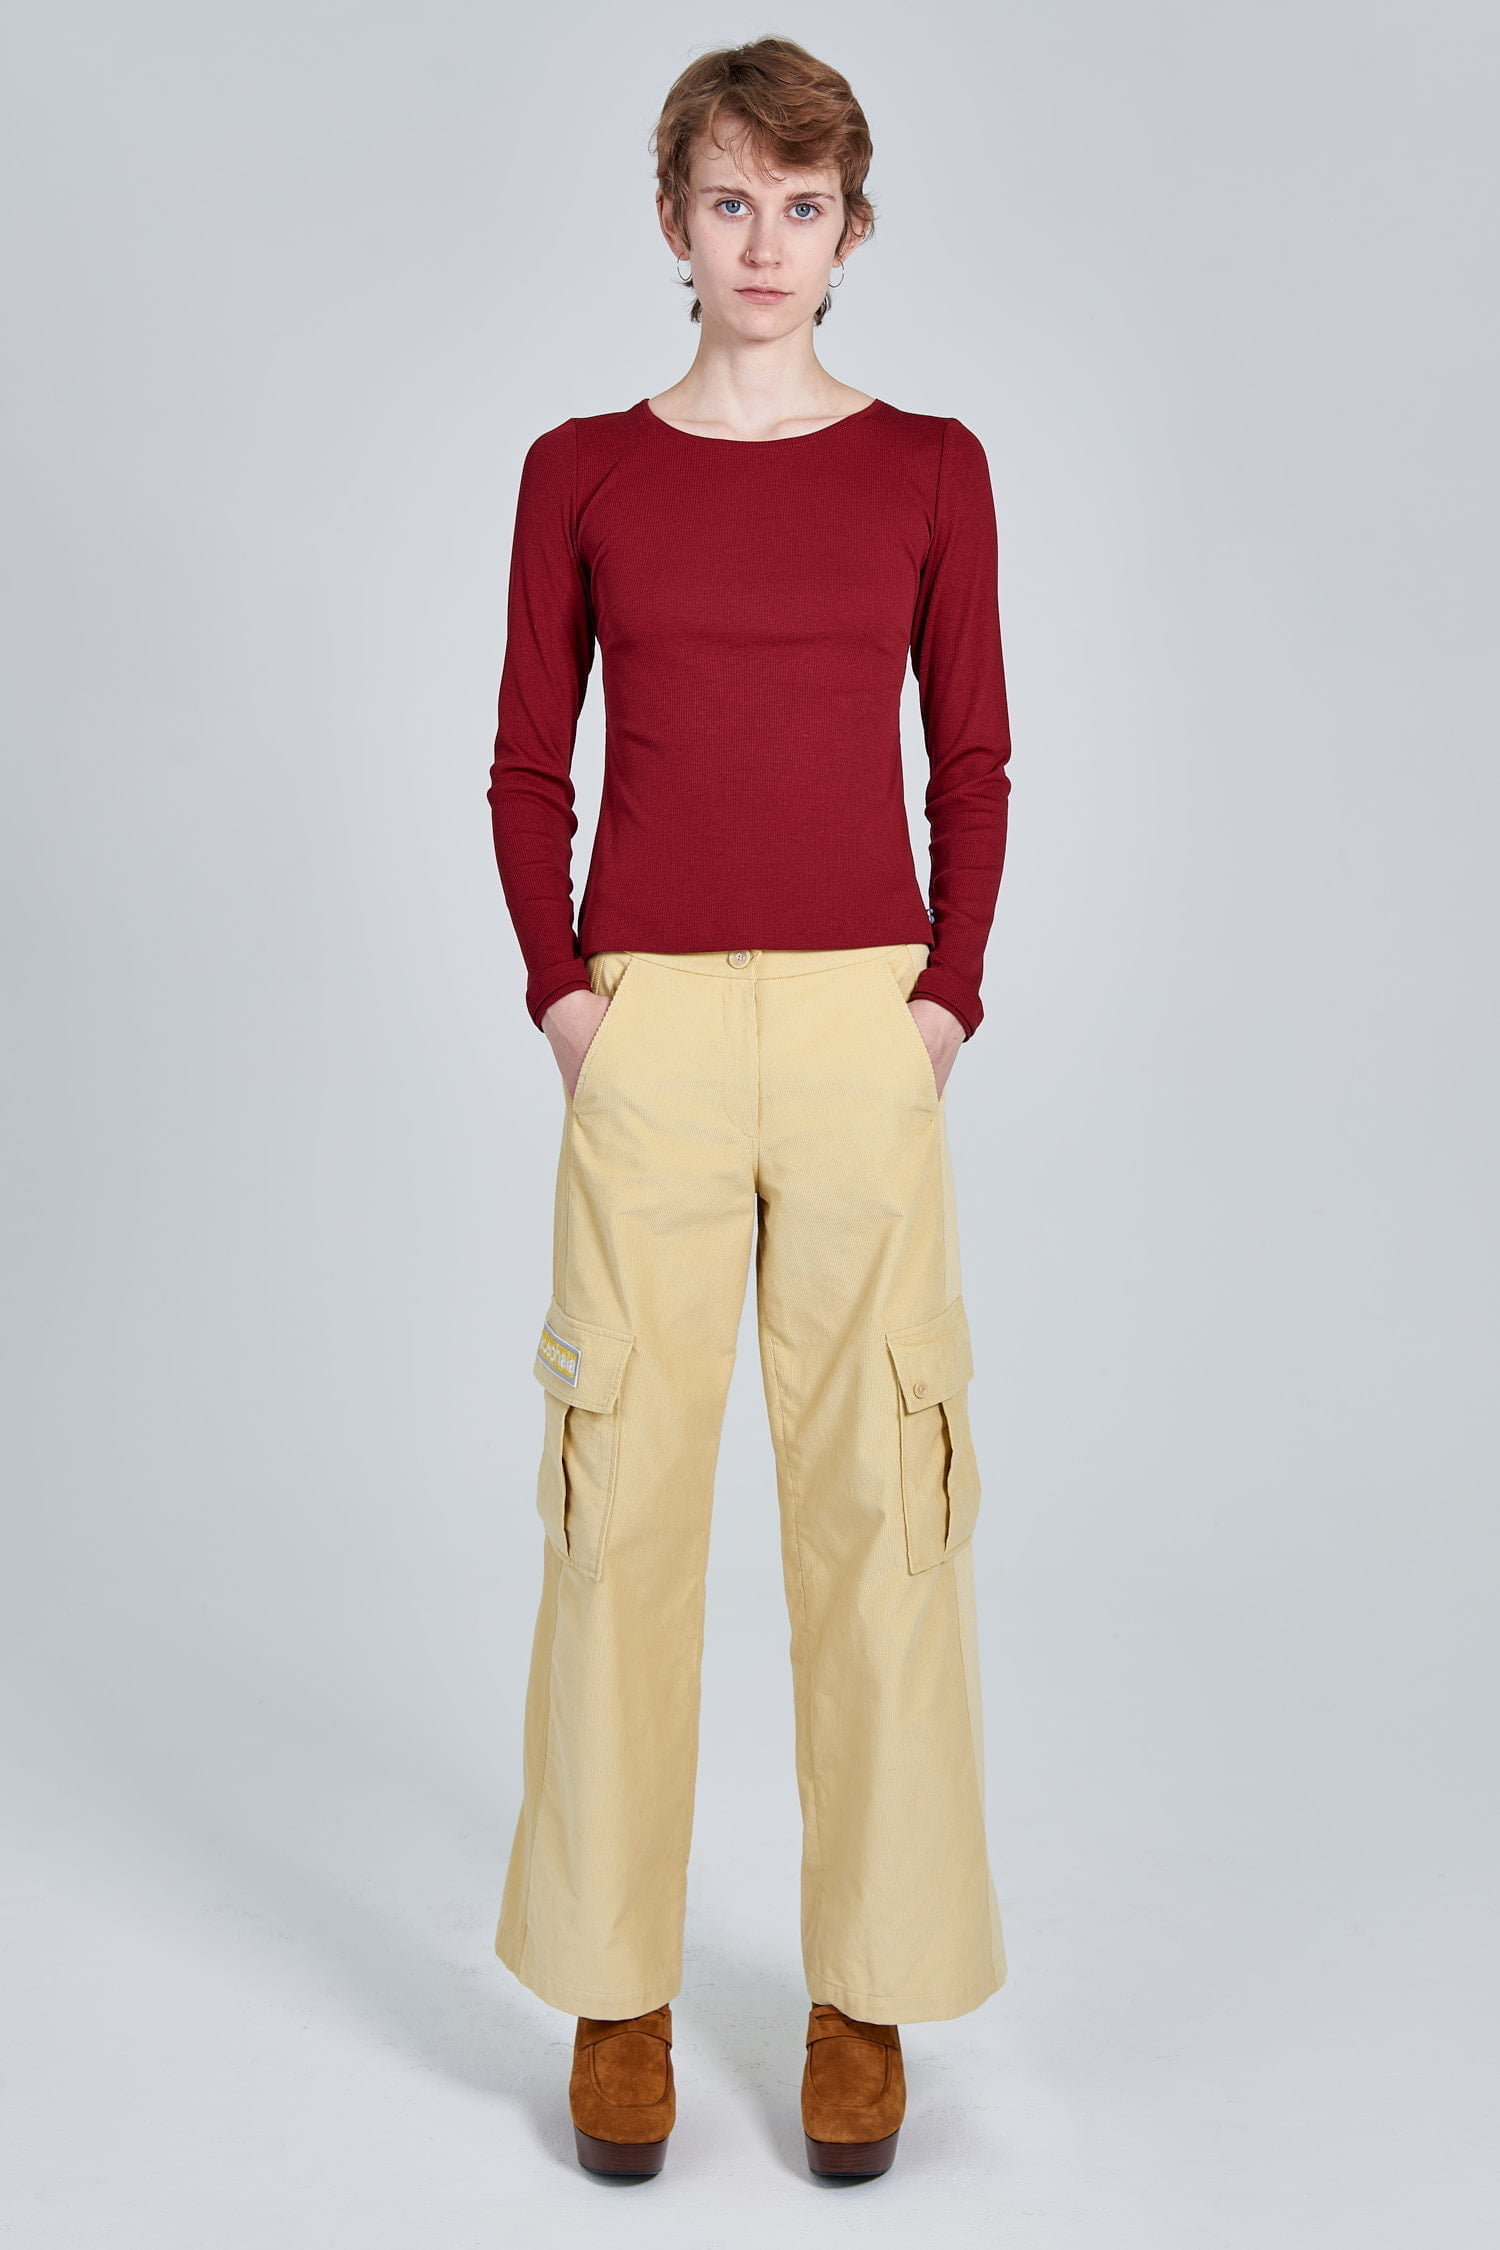 Acephala Fw 2020 21 Red Longsleeve Yellow Corduroy Trousers